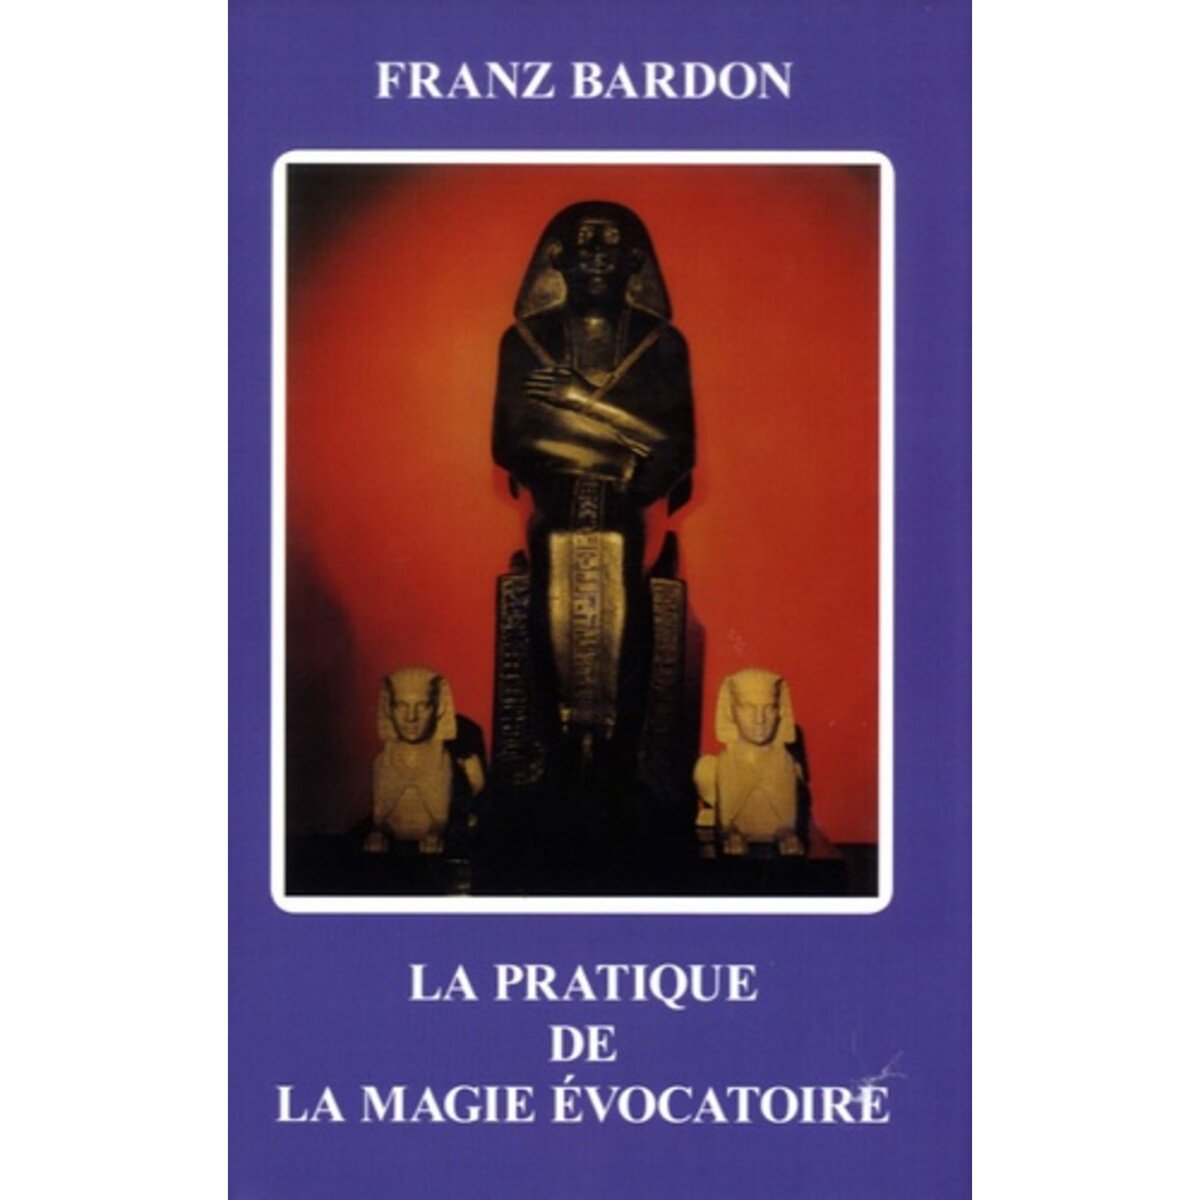  LA PRATIQUE DE LA MAGIE EVOCATOIRE, Bardon Franz